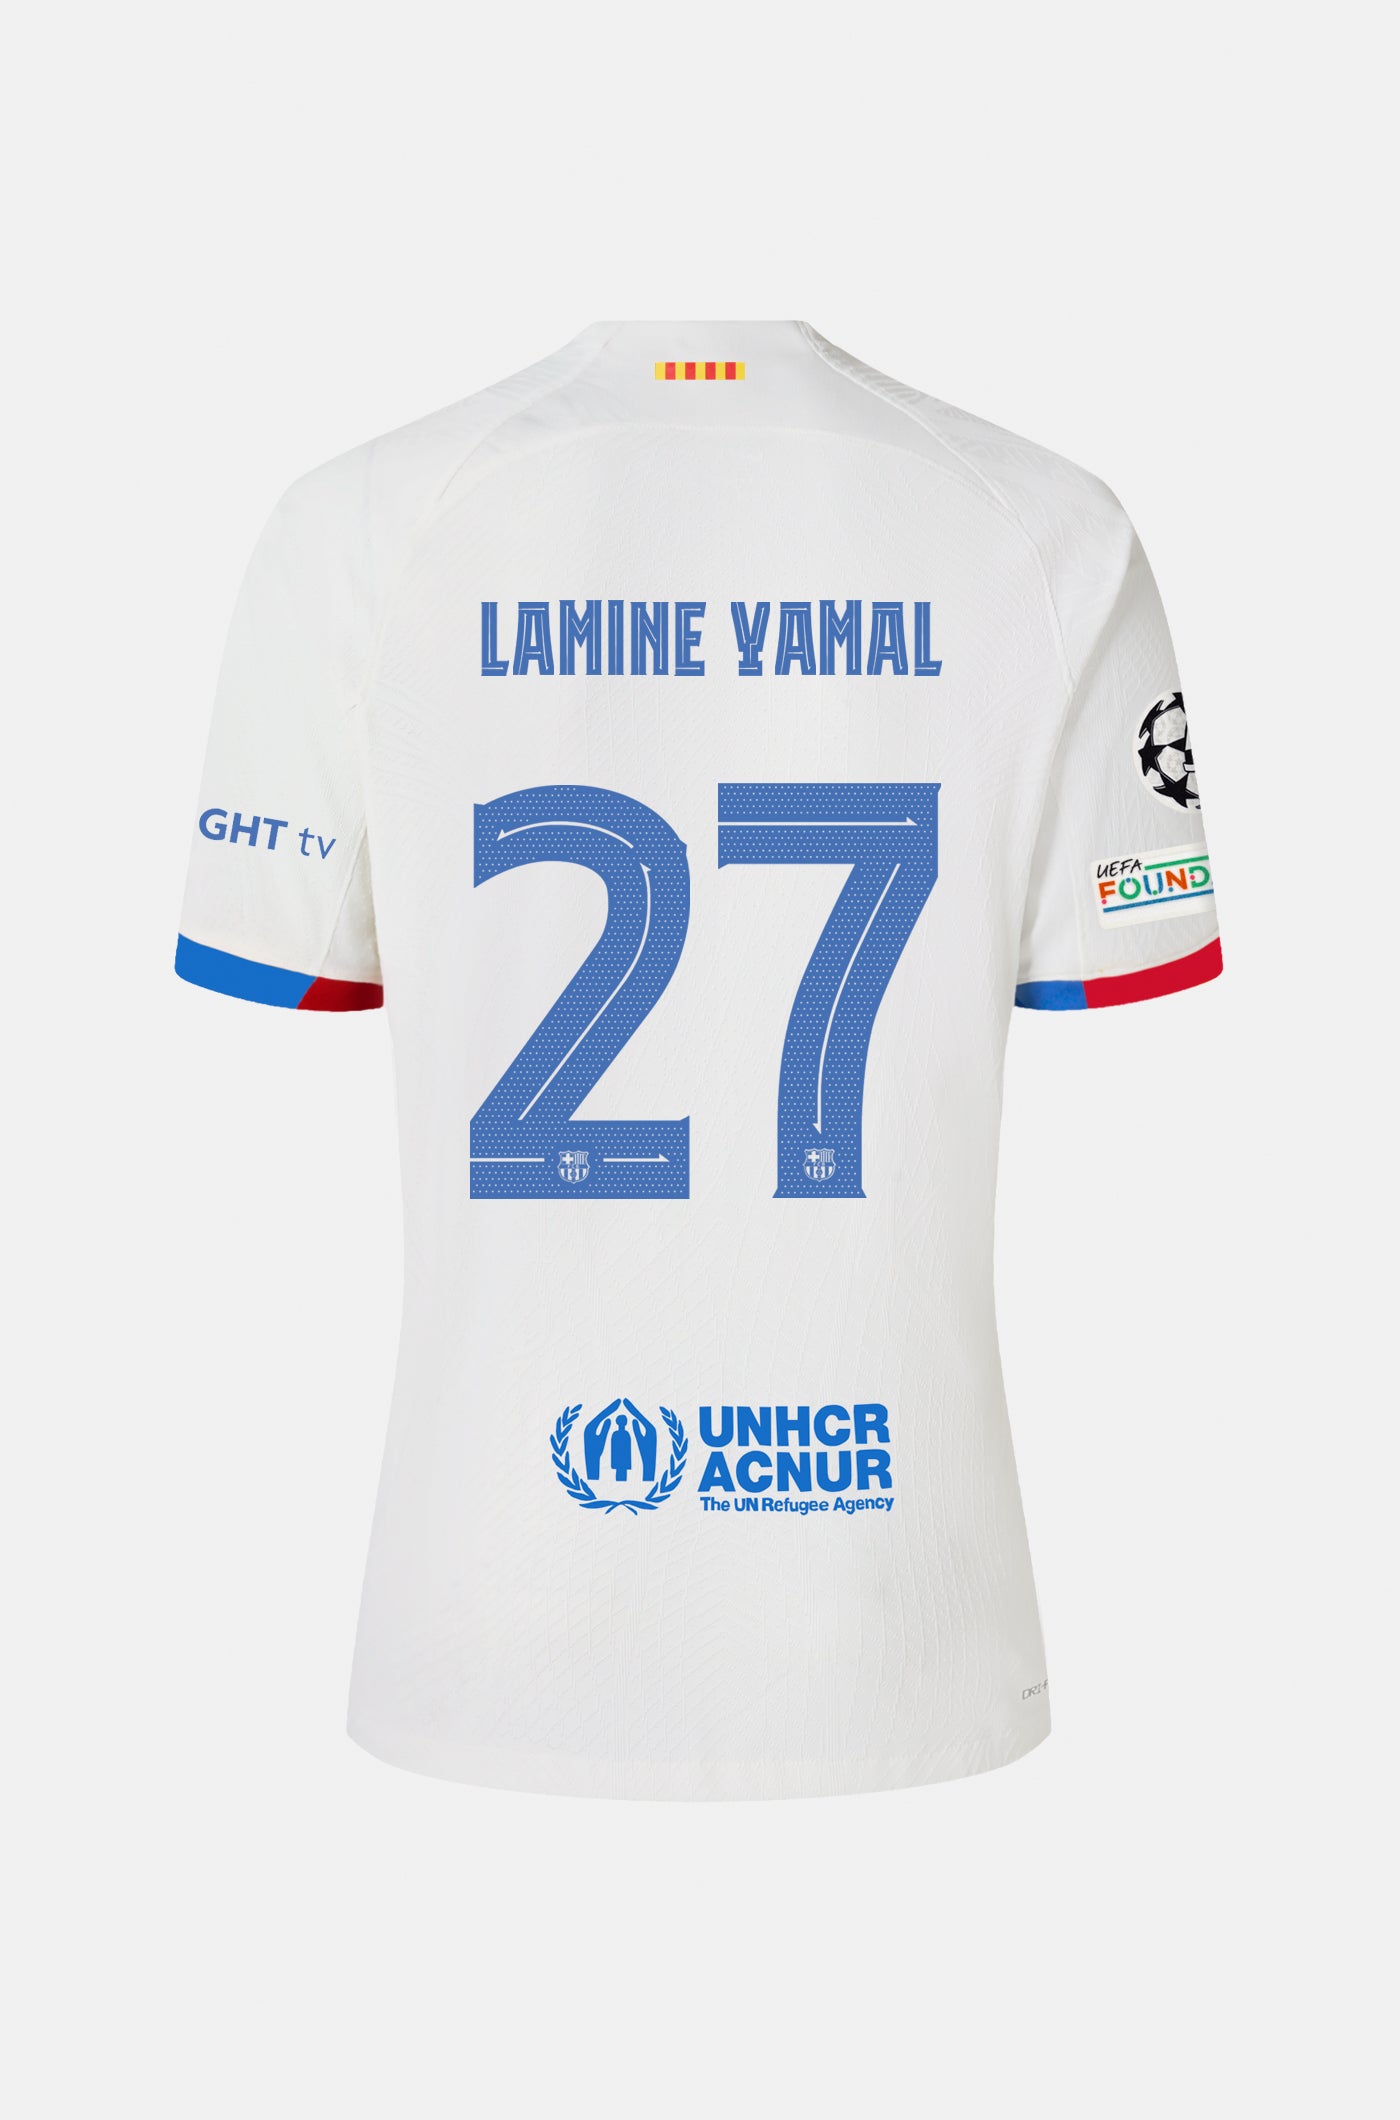 UCL FC Barcelona Away Shirt 23/24 Player’s Edition - Women  - LAMINE YAMAL